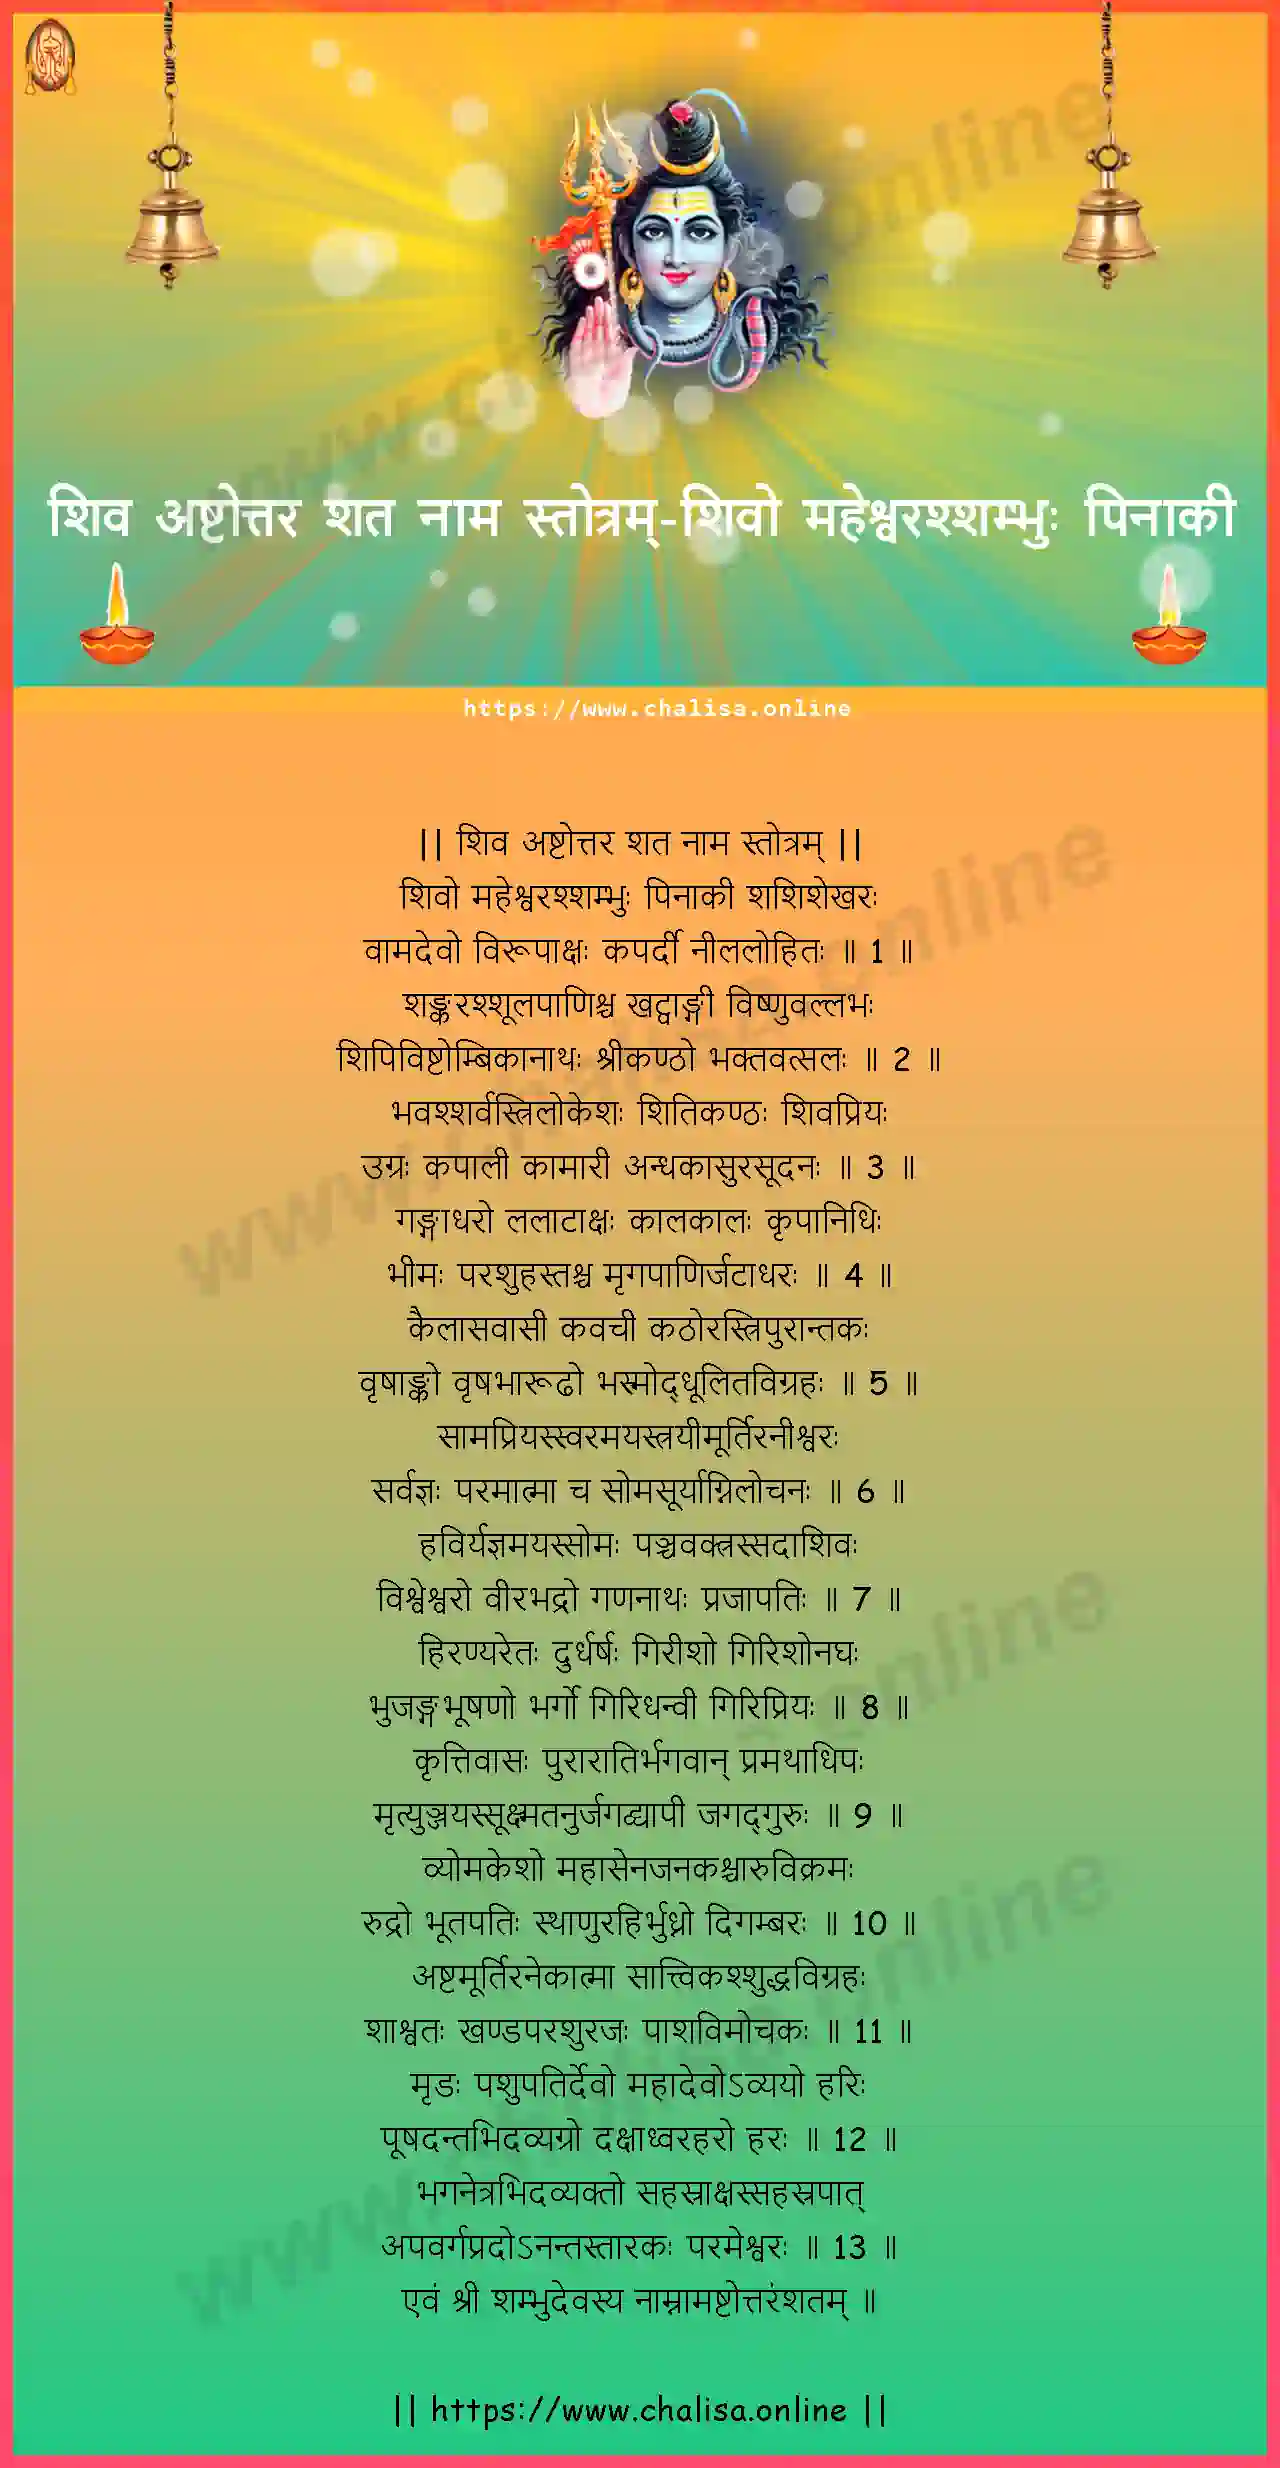 sivo-mahesvarassambhuh-shiva-ashtottara-sata-nama-stotram-devanagari-devanagari-lyrics-download